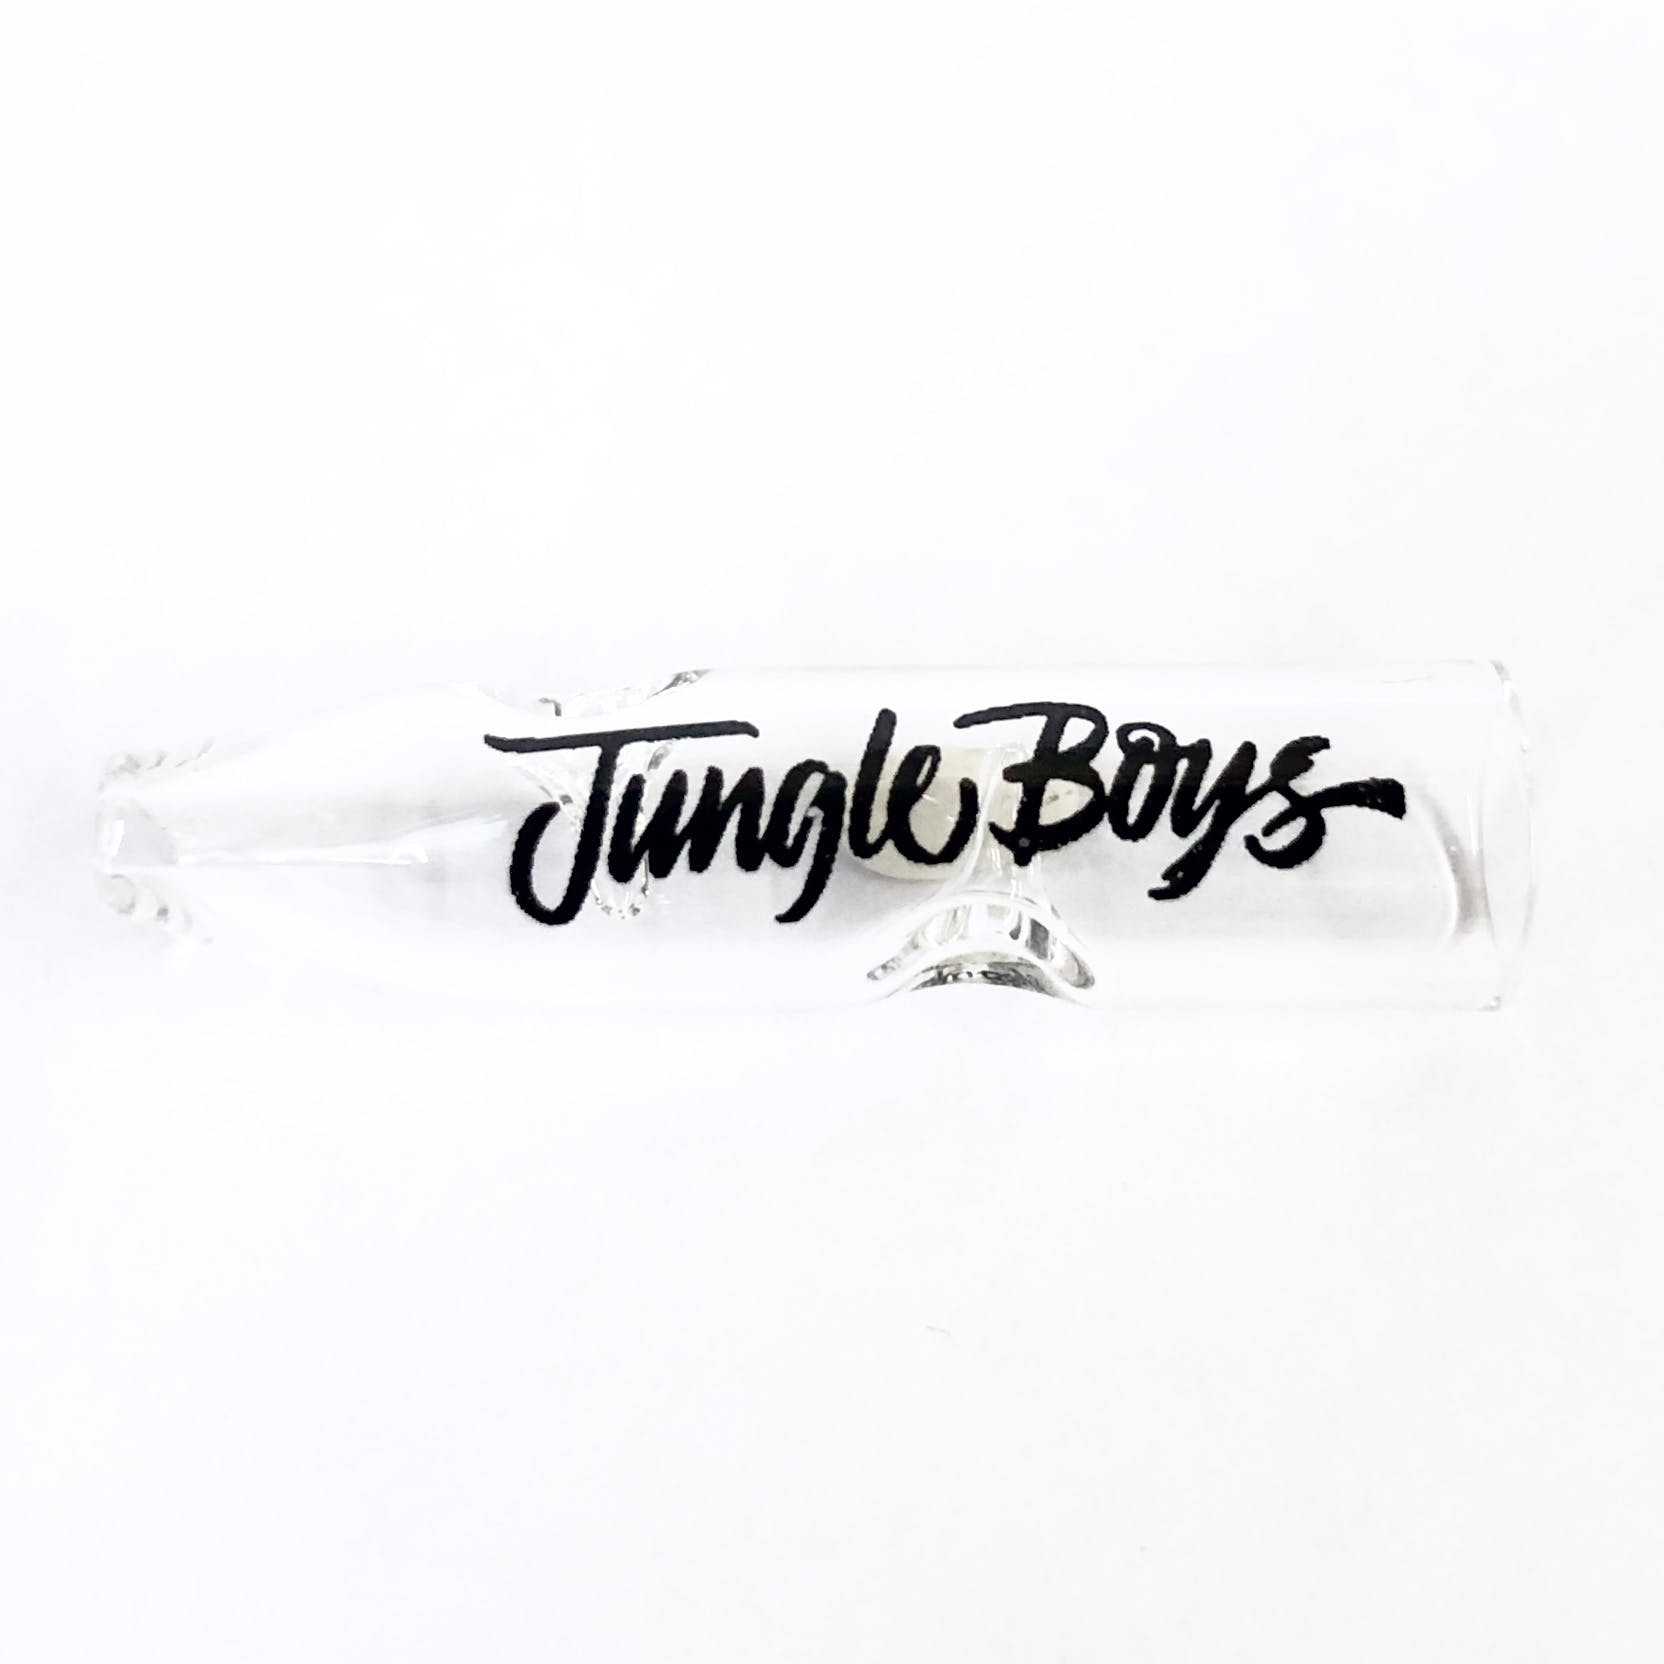 gear-jungle-boys-phunky-pheel-tip-medicinalrecreational